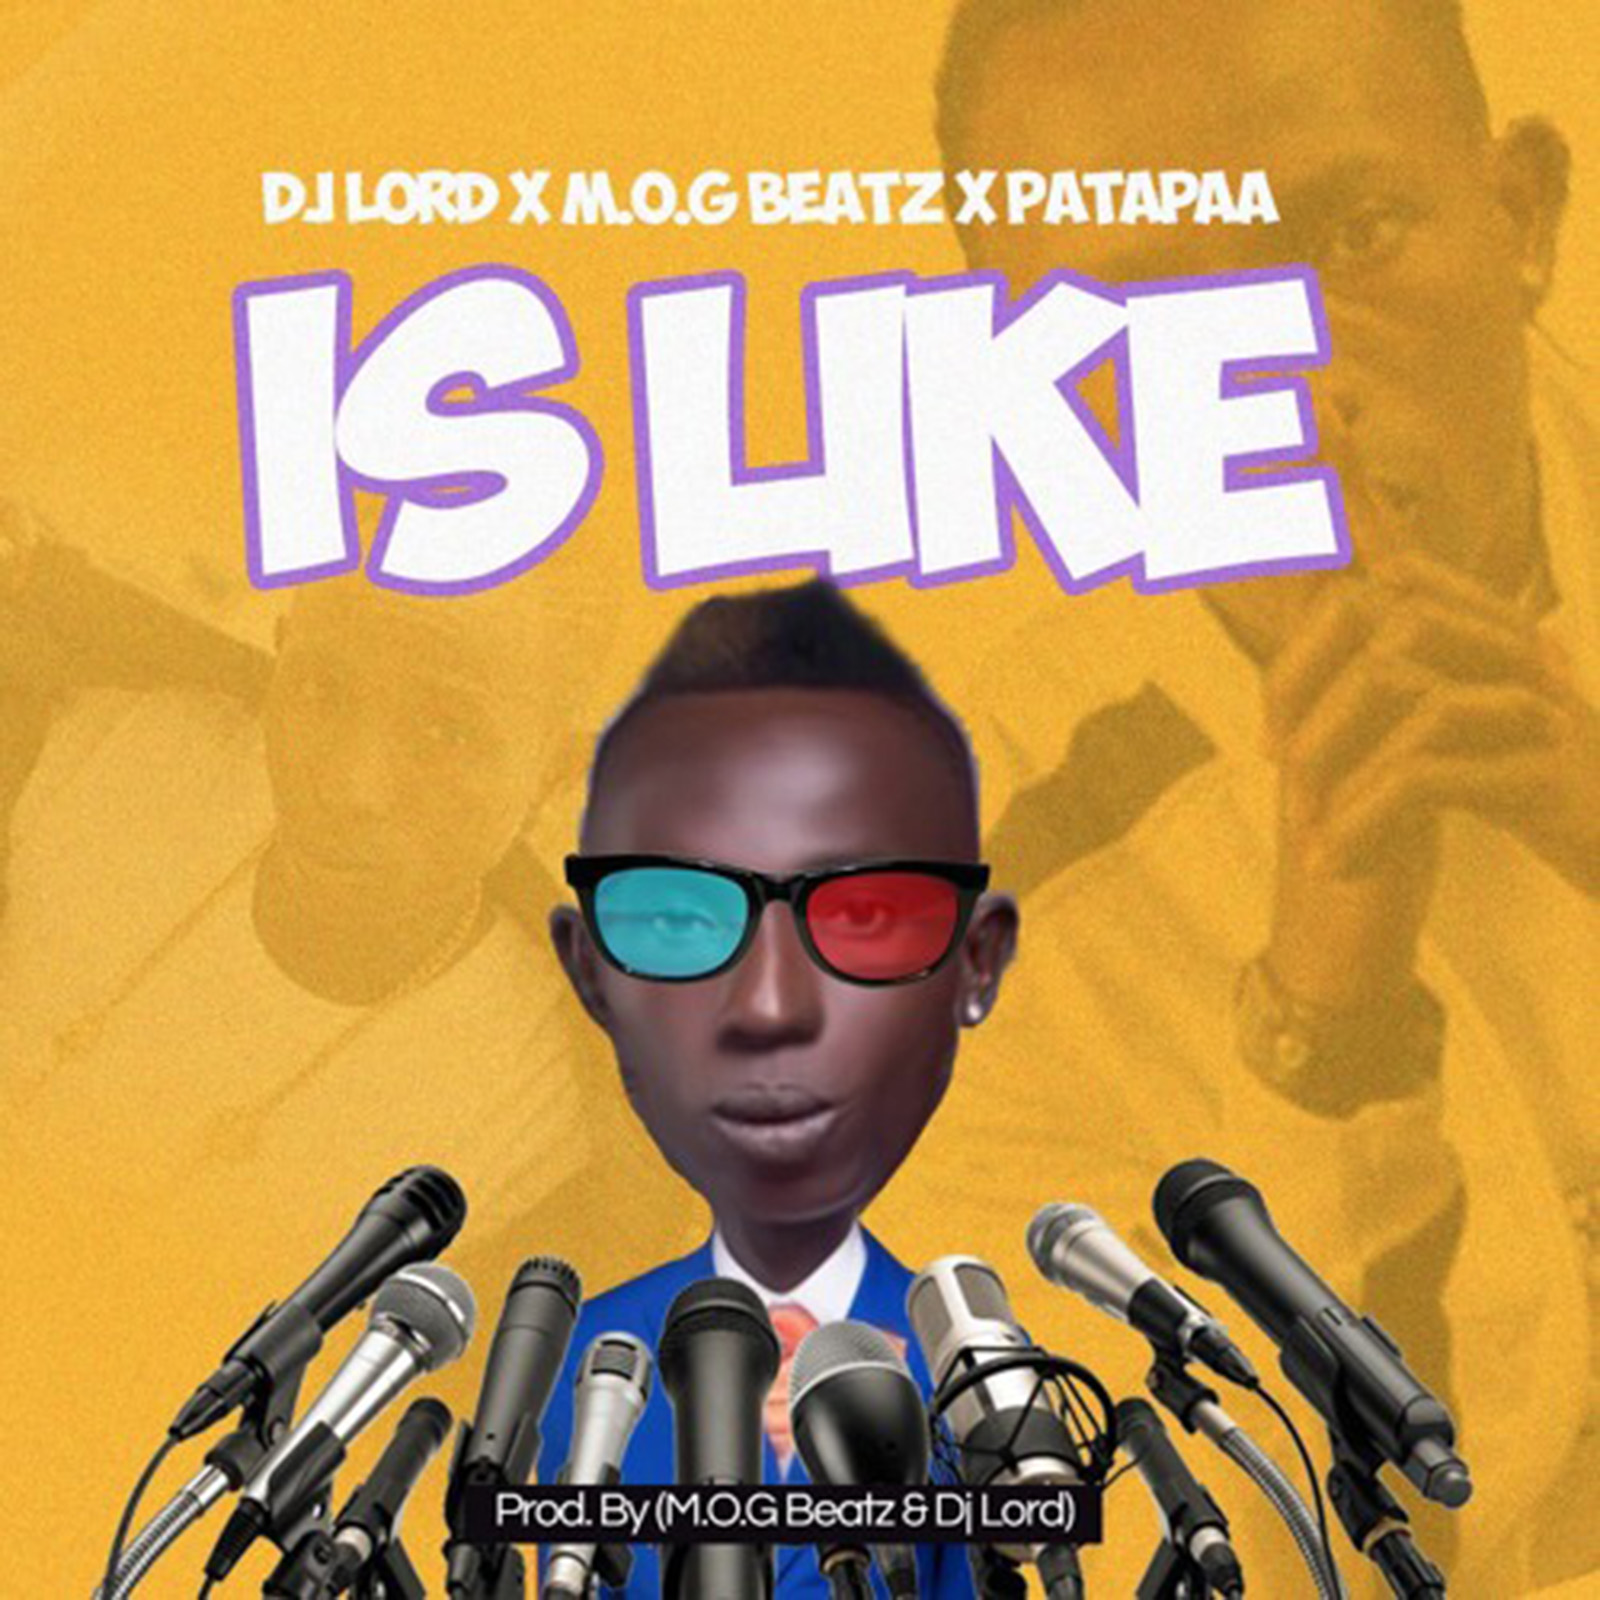 Is Like by DJ Lord feat. MOG Beatz & Patapaa